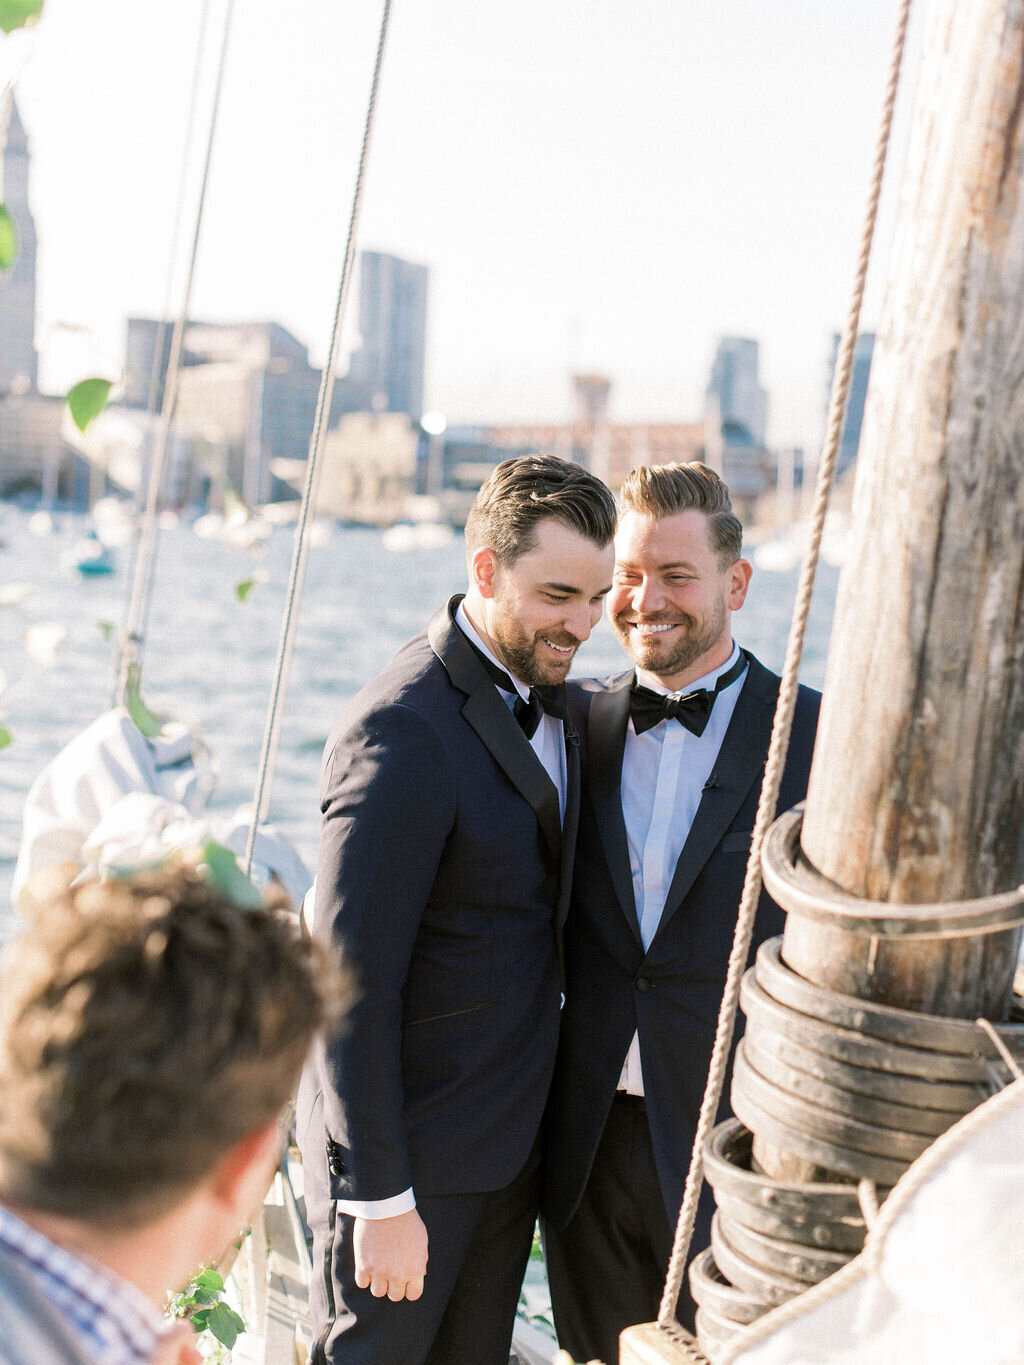 Kate-Murtaugh-Events-Boston-Harbor-sail-boat-yacht-elopement-wedding-planner-LGBTQ-friendly